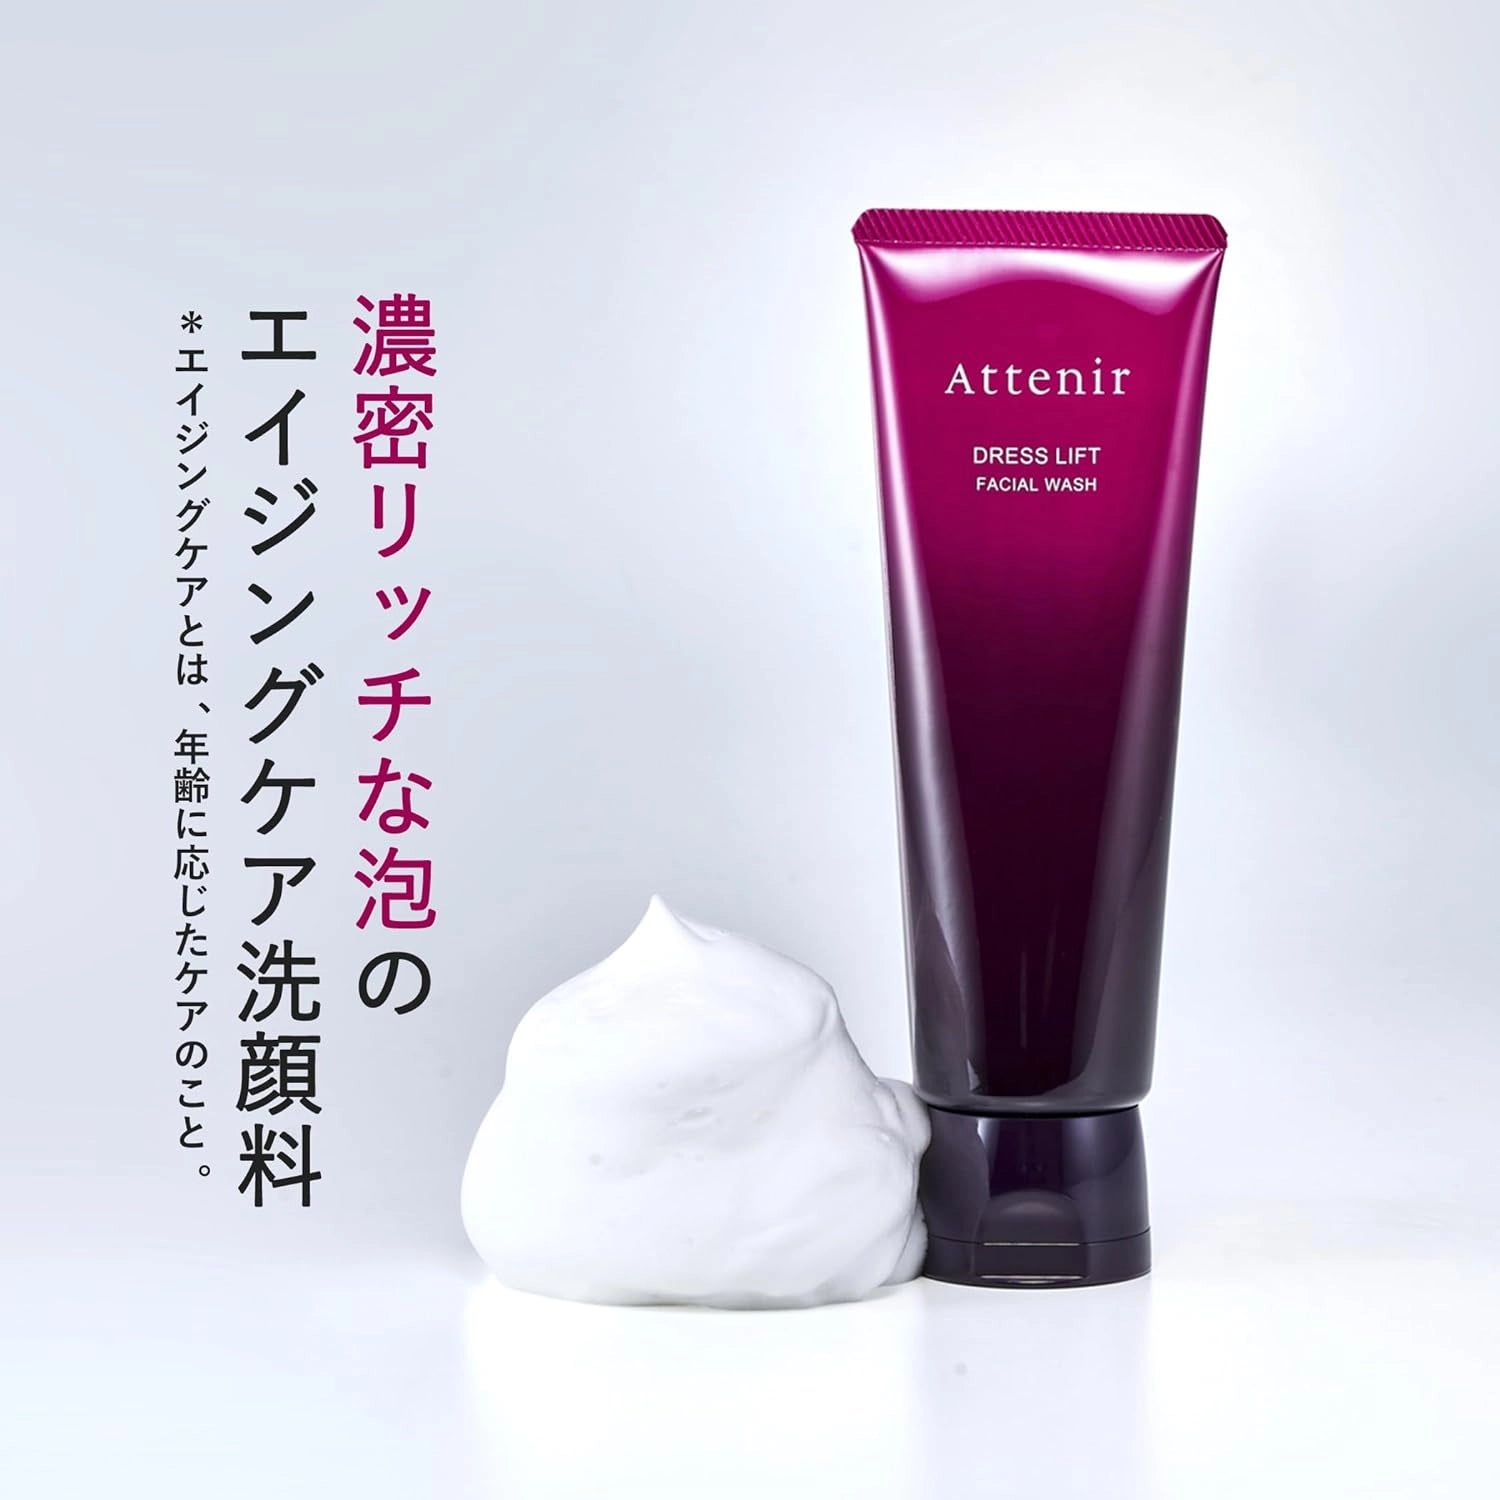 Attenir Dress Lift Facial Wash 120g - Buy Me Japan